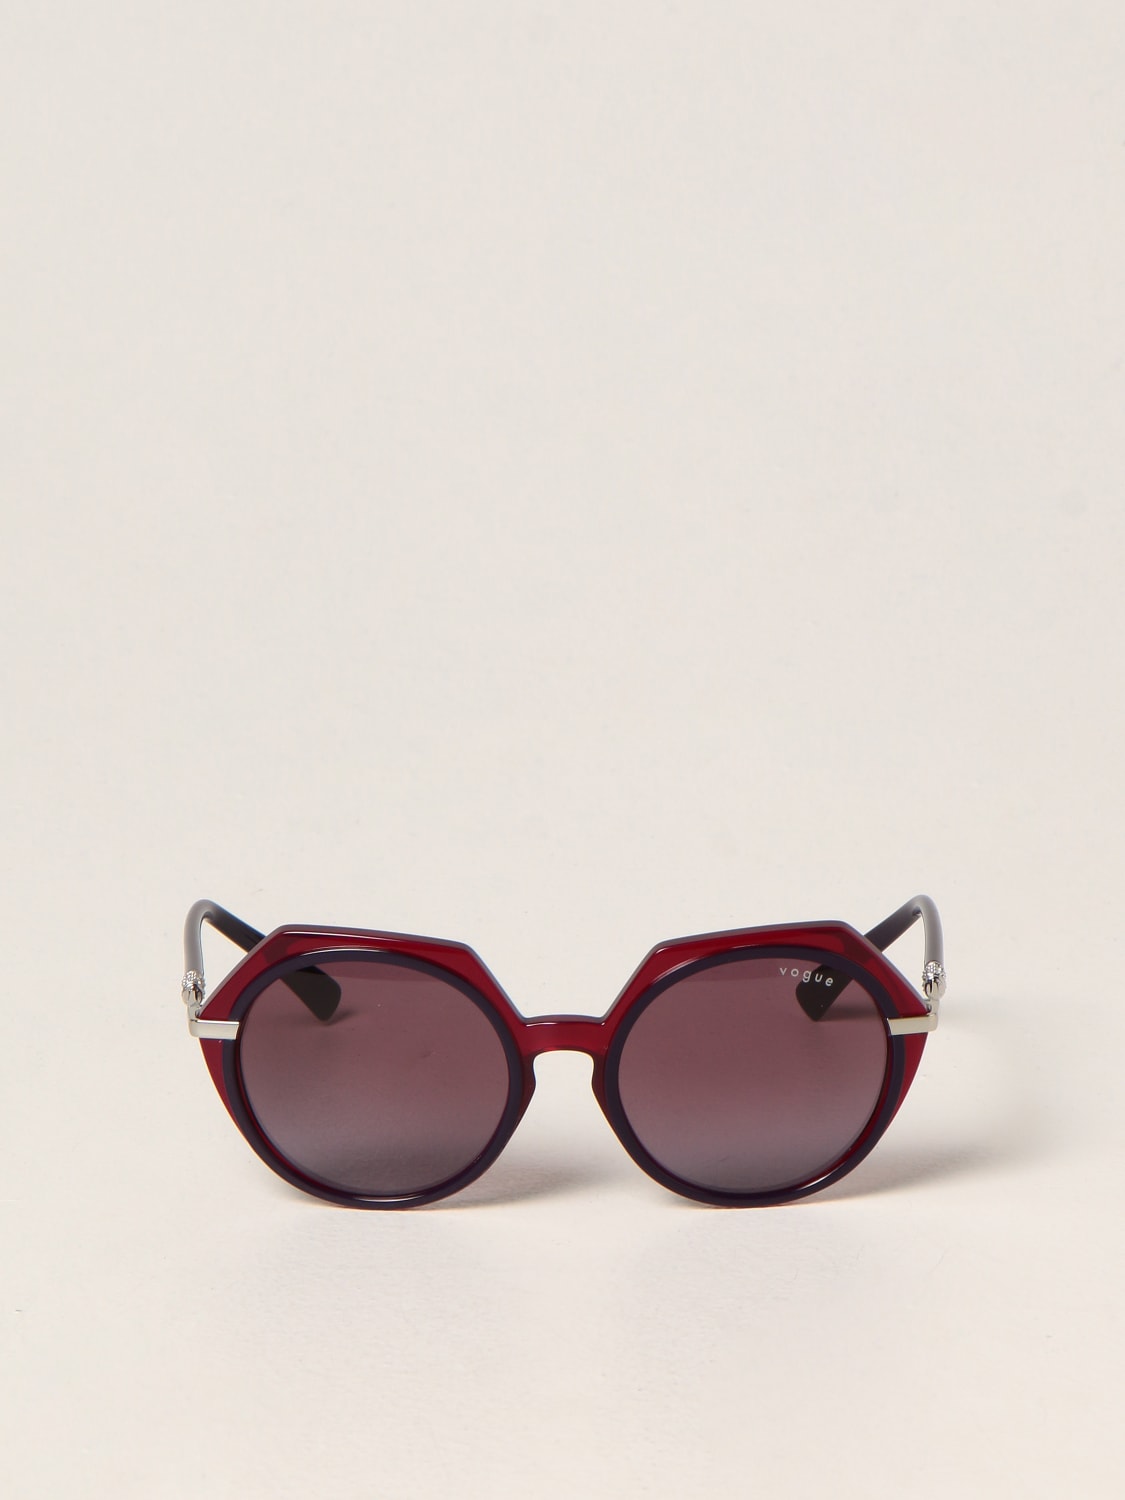 Sunglasses Vogue: Vogue sunglasses for woman red 2